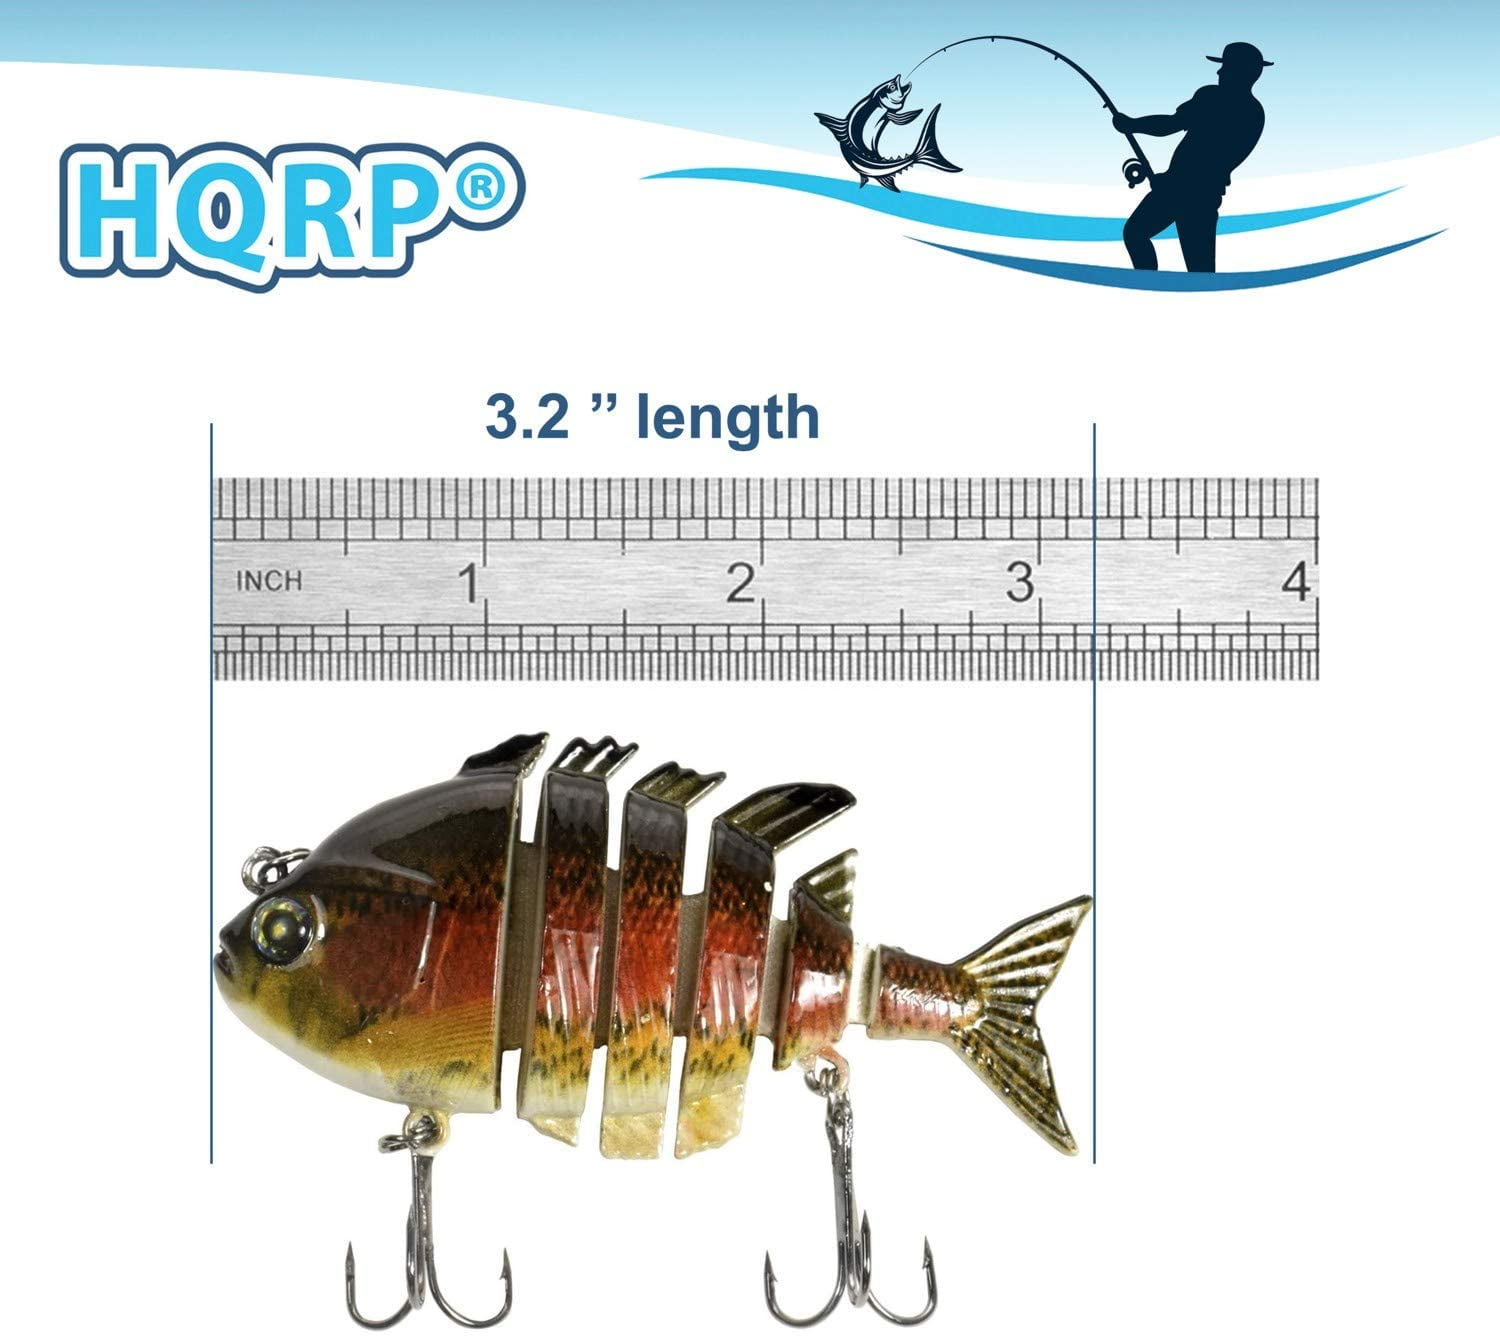 HQRP Bluegill Fishing Lure Fish Crank Bait Topwater Multi-Section